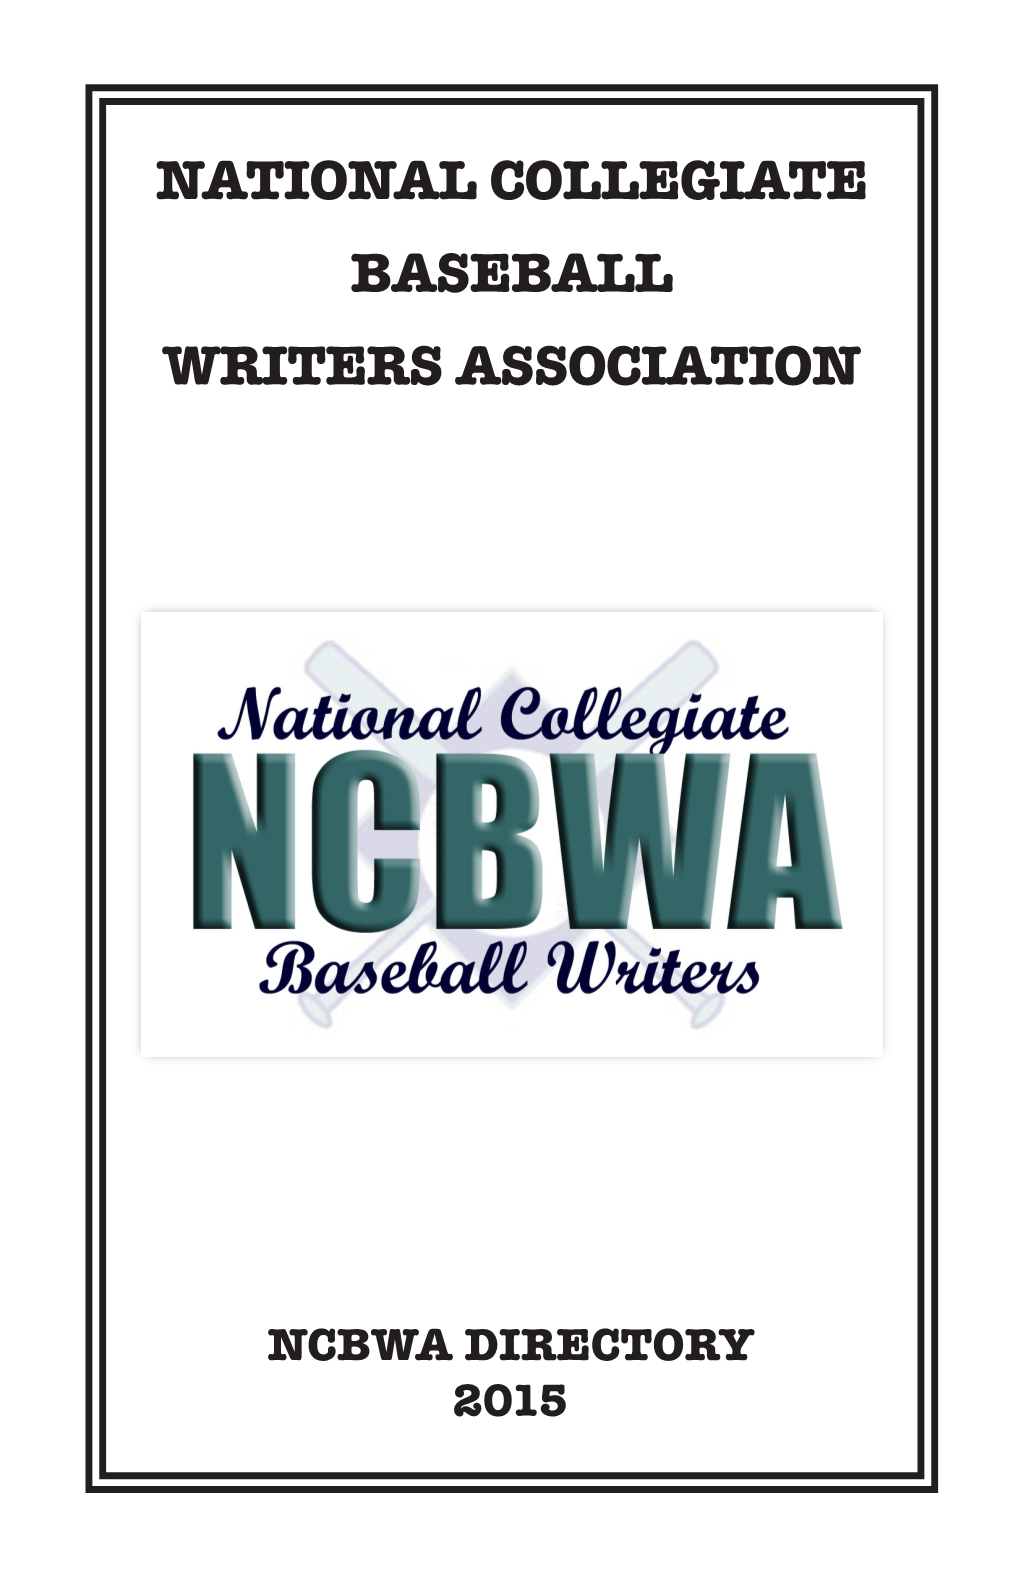 National Collegiate Baseball Writers Association